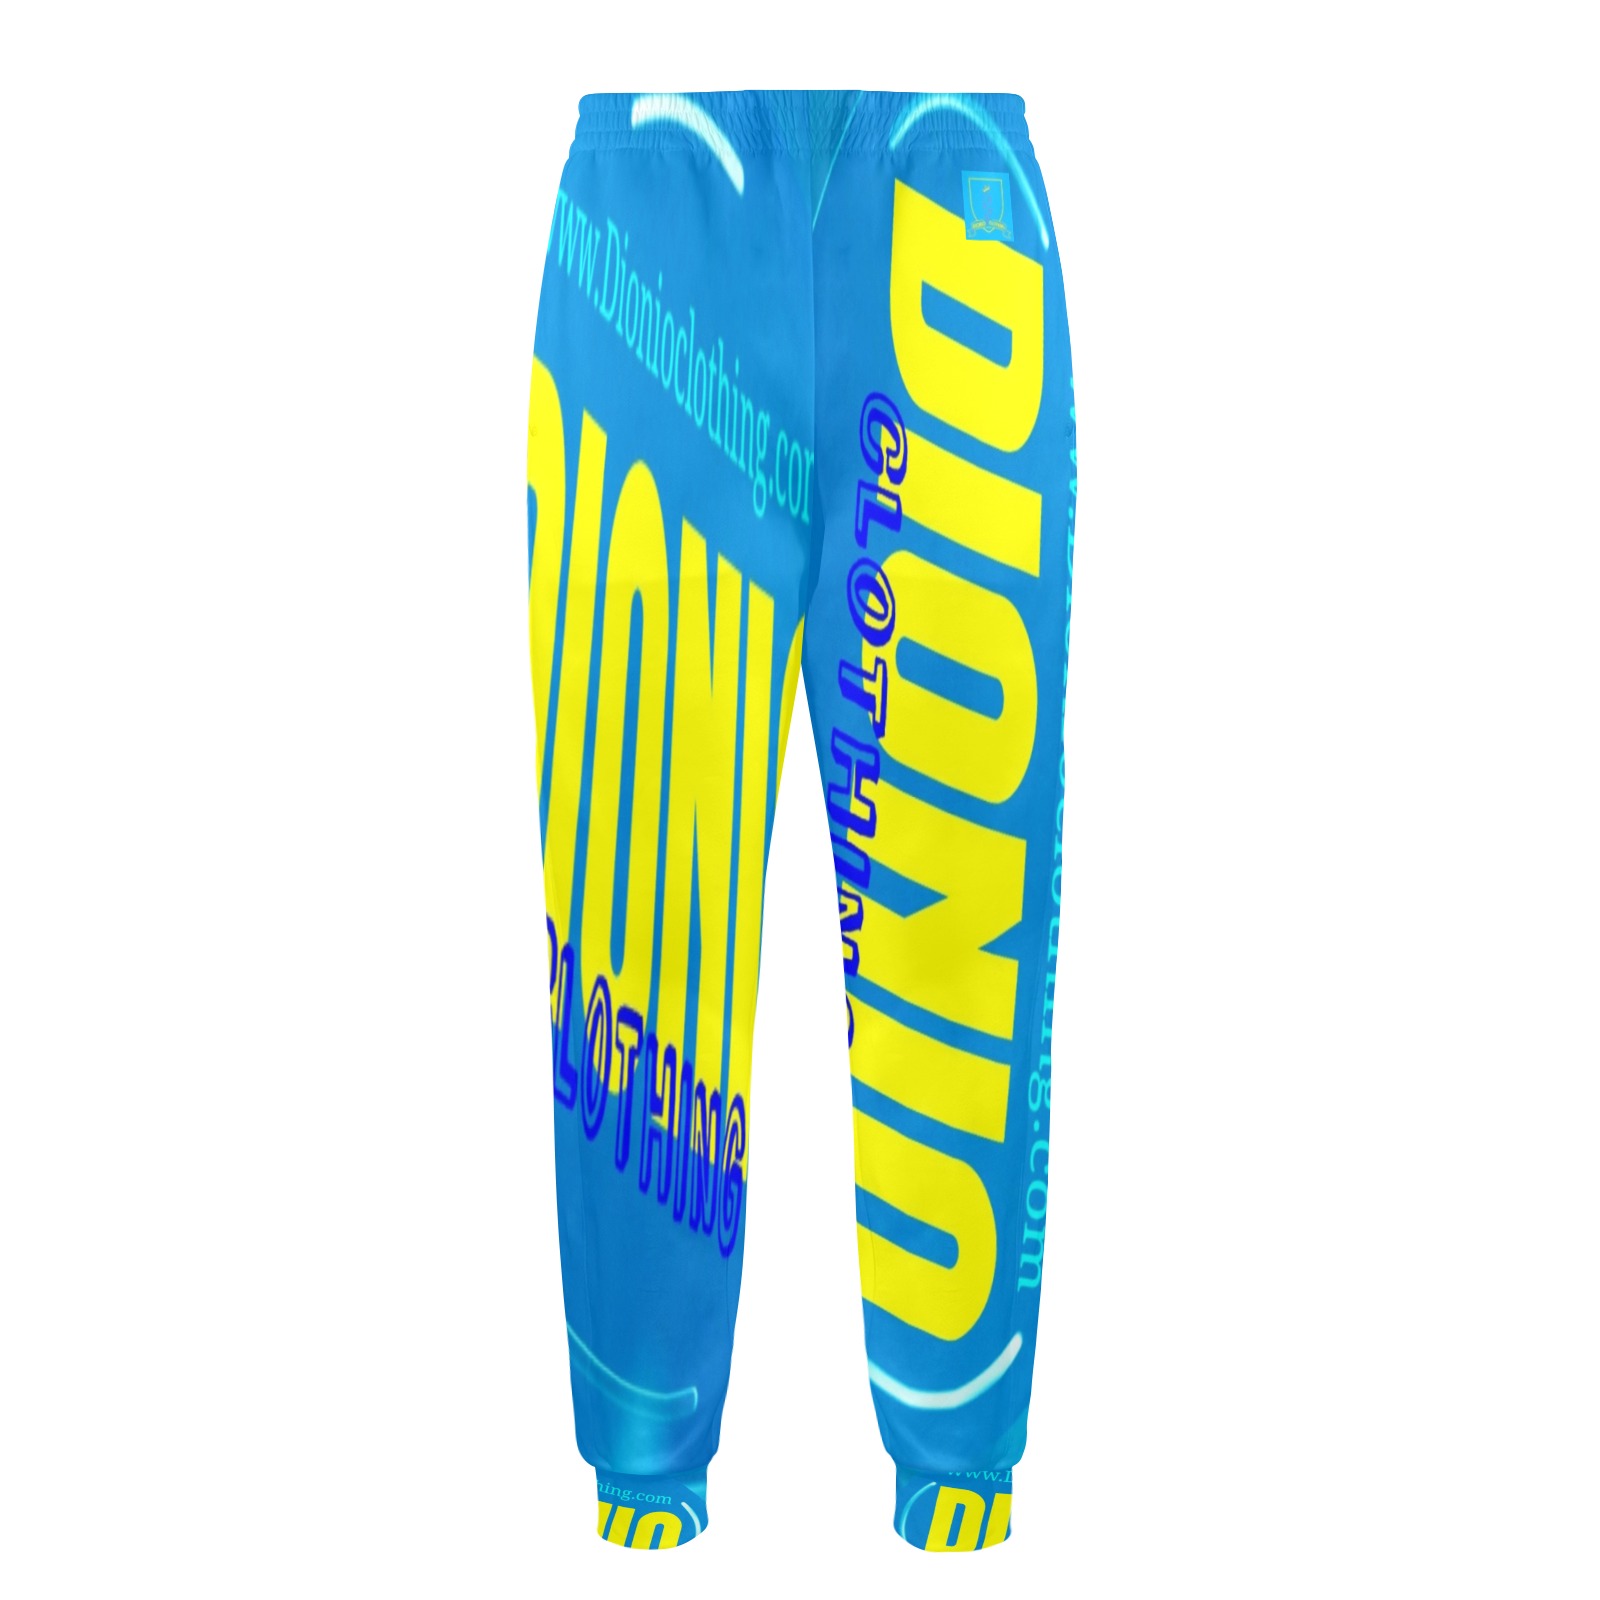 DIONIO Clothing - Turquoise & Yellow Alt. Big Logo Casual Sweatpants Men's Casual Sweatpants (Model L72)